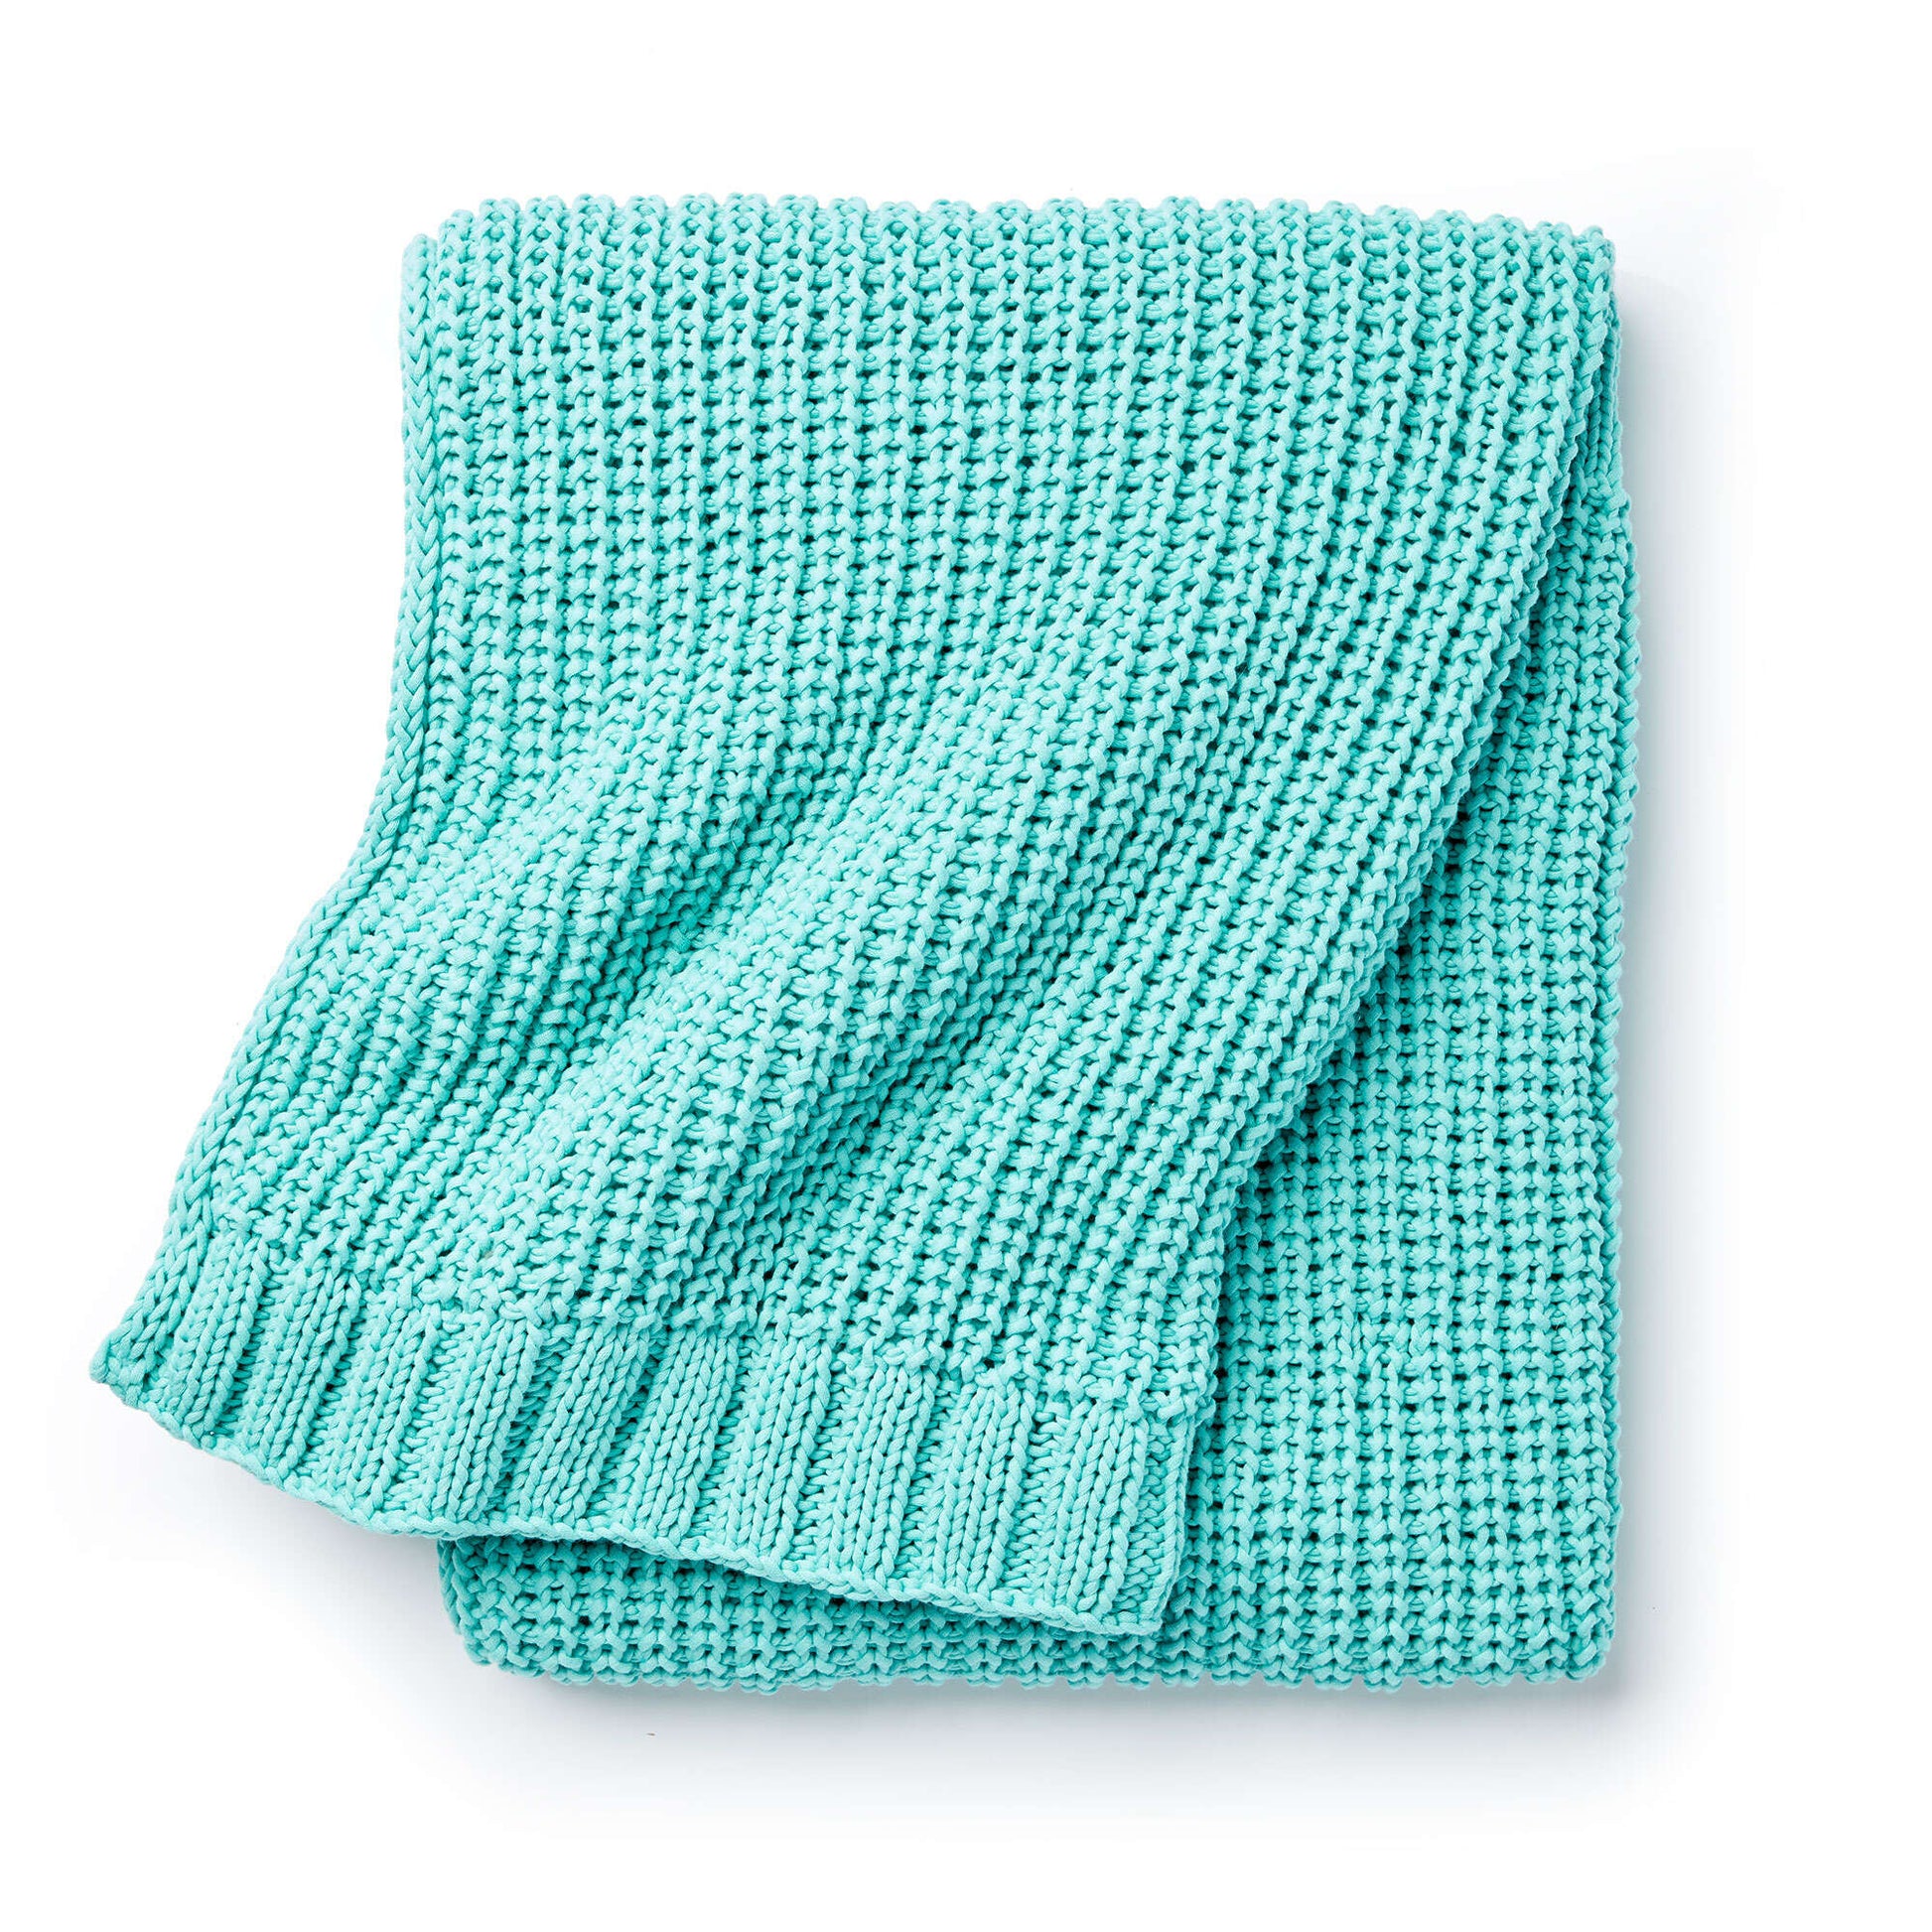 Bernat Shaker Knit Rib Blanket Knit Blanket made in Bernat Maker Home Dec yarn